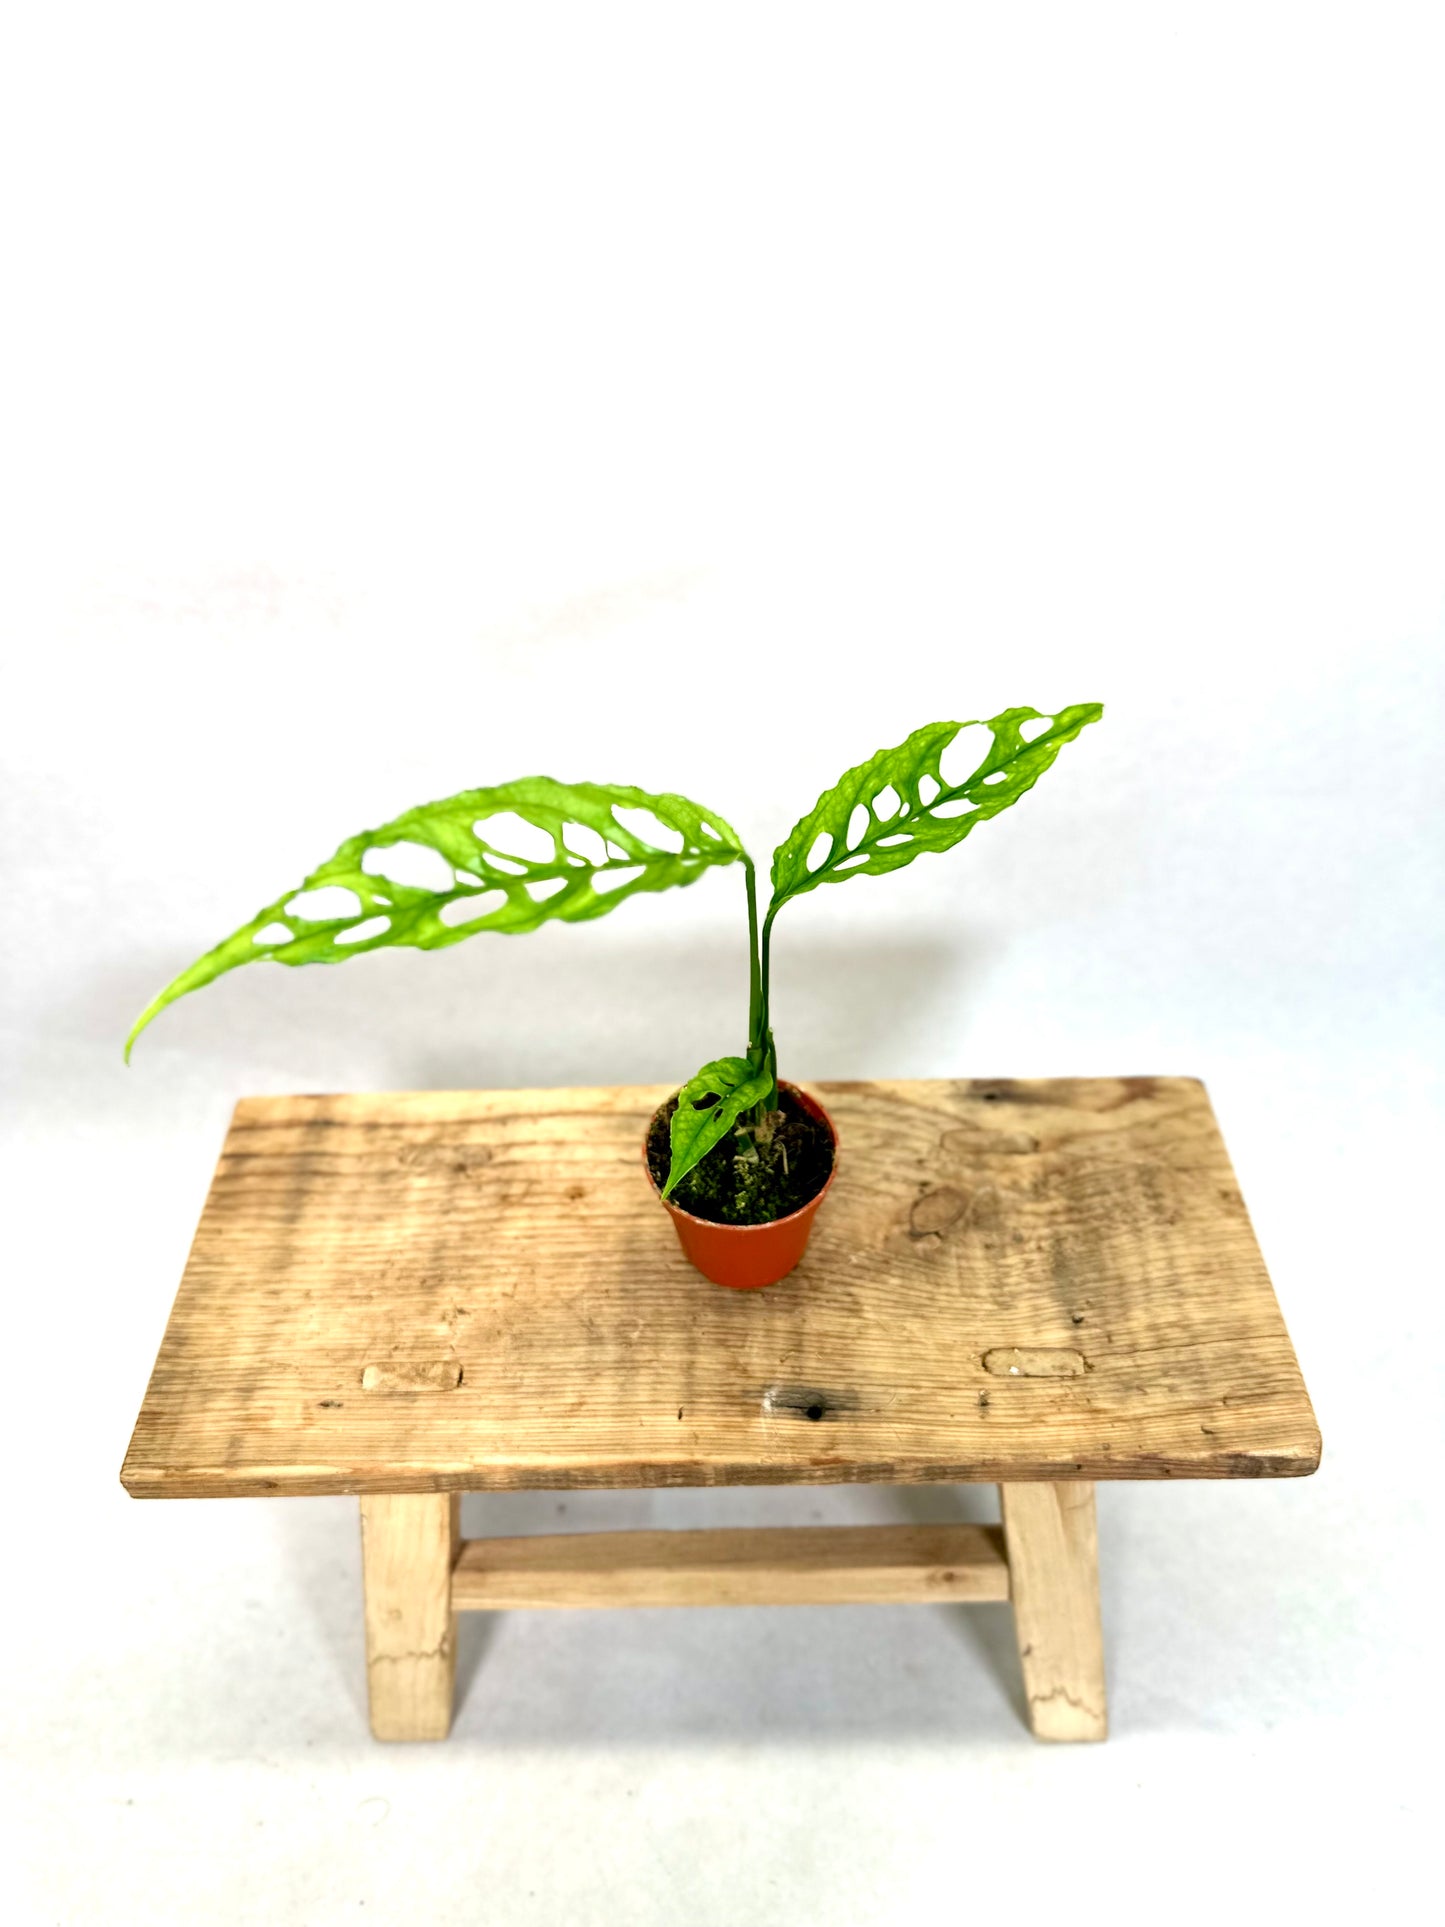 Monstera Obliqua Peru - Baby plant